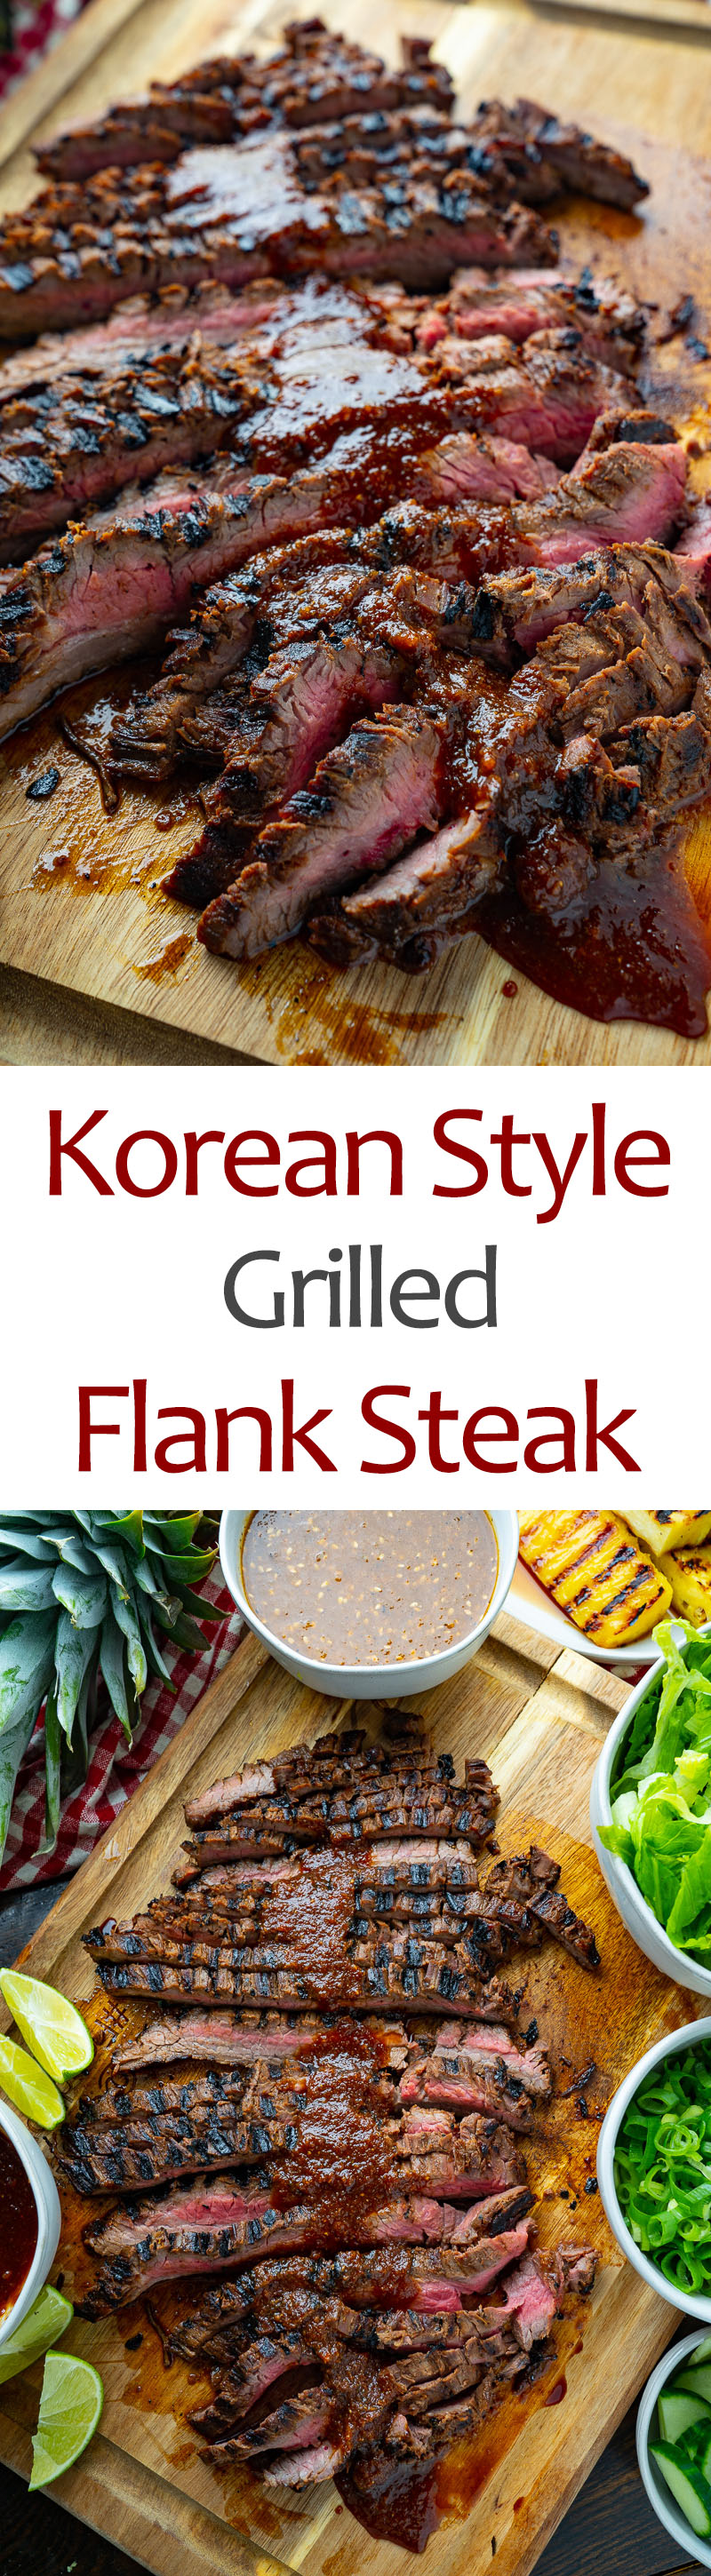 Korean Style Grilled Flank Steak